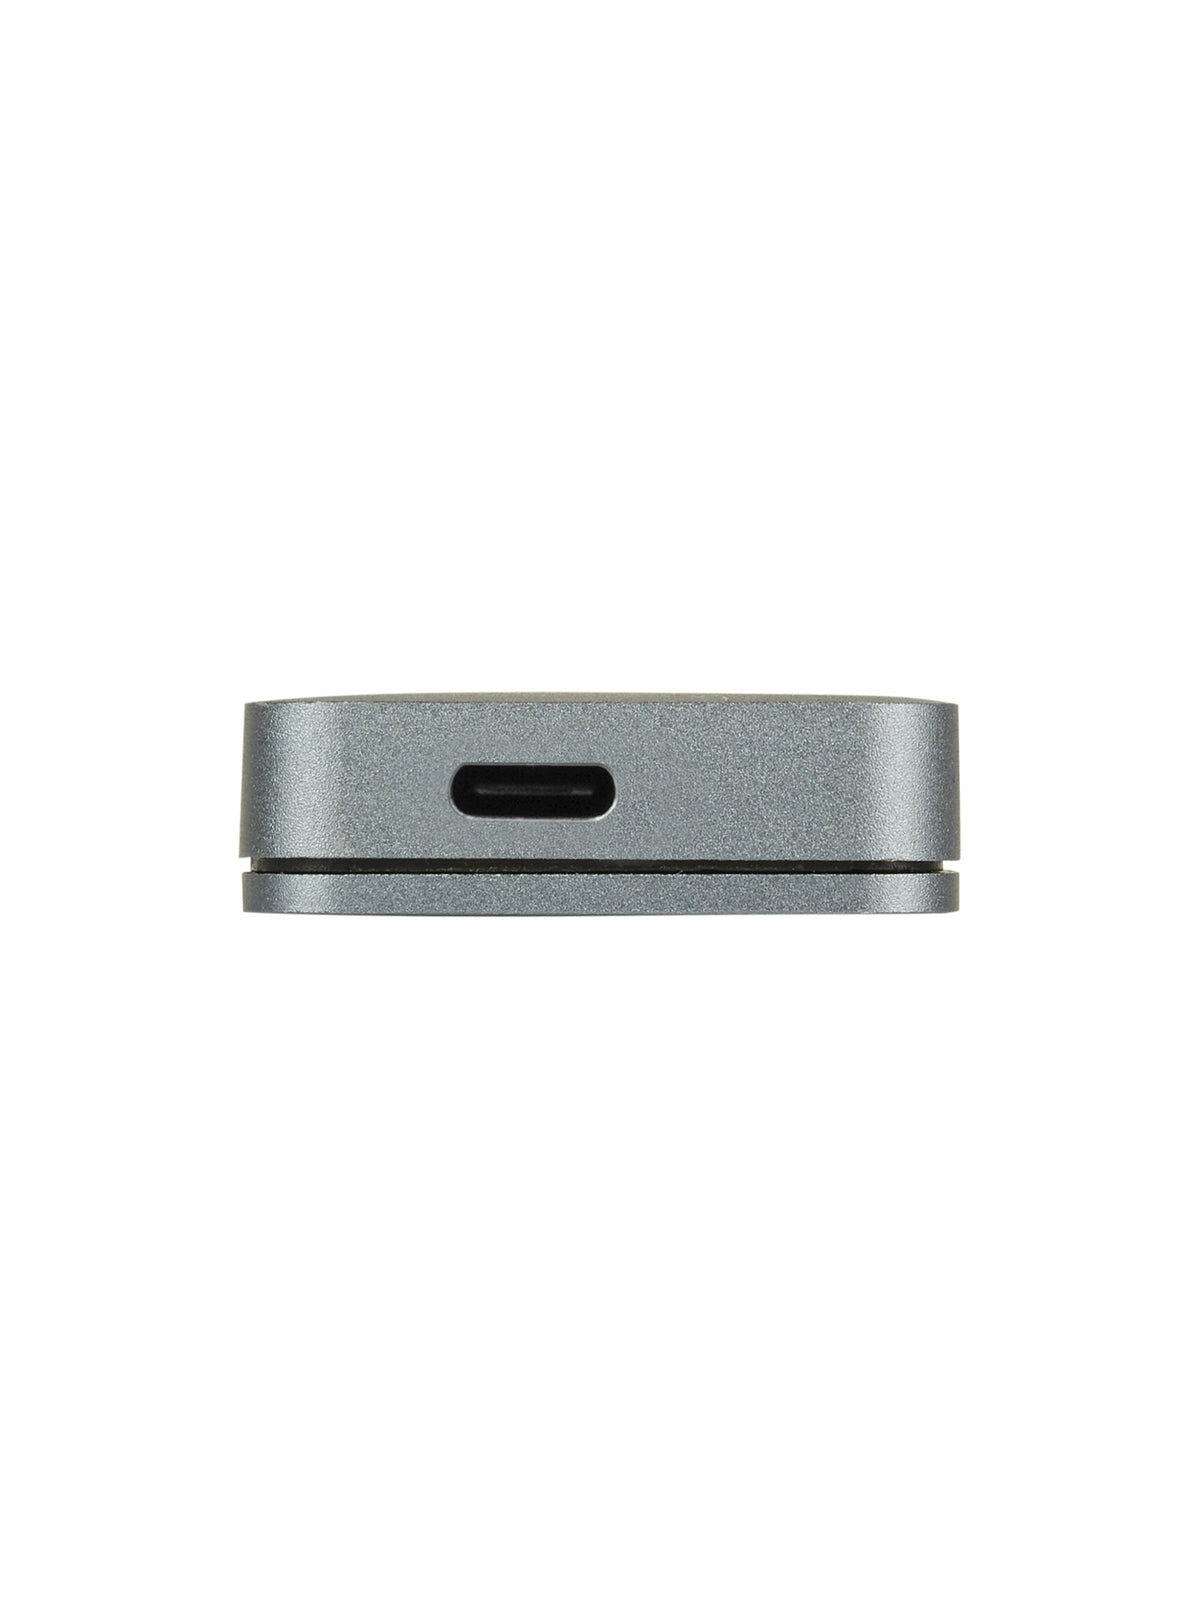 Verbatim Executive Fingerprint Secure - USB 3.1 Gen 1 External SSD - 512 GB